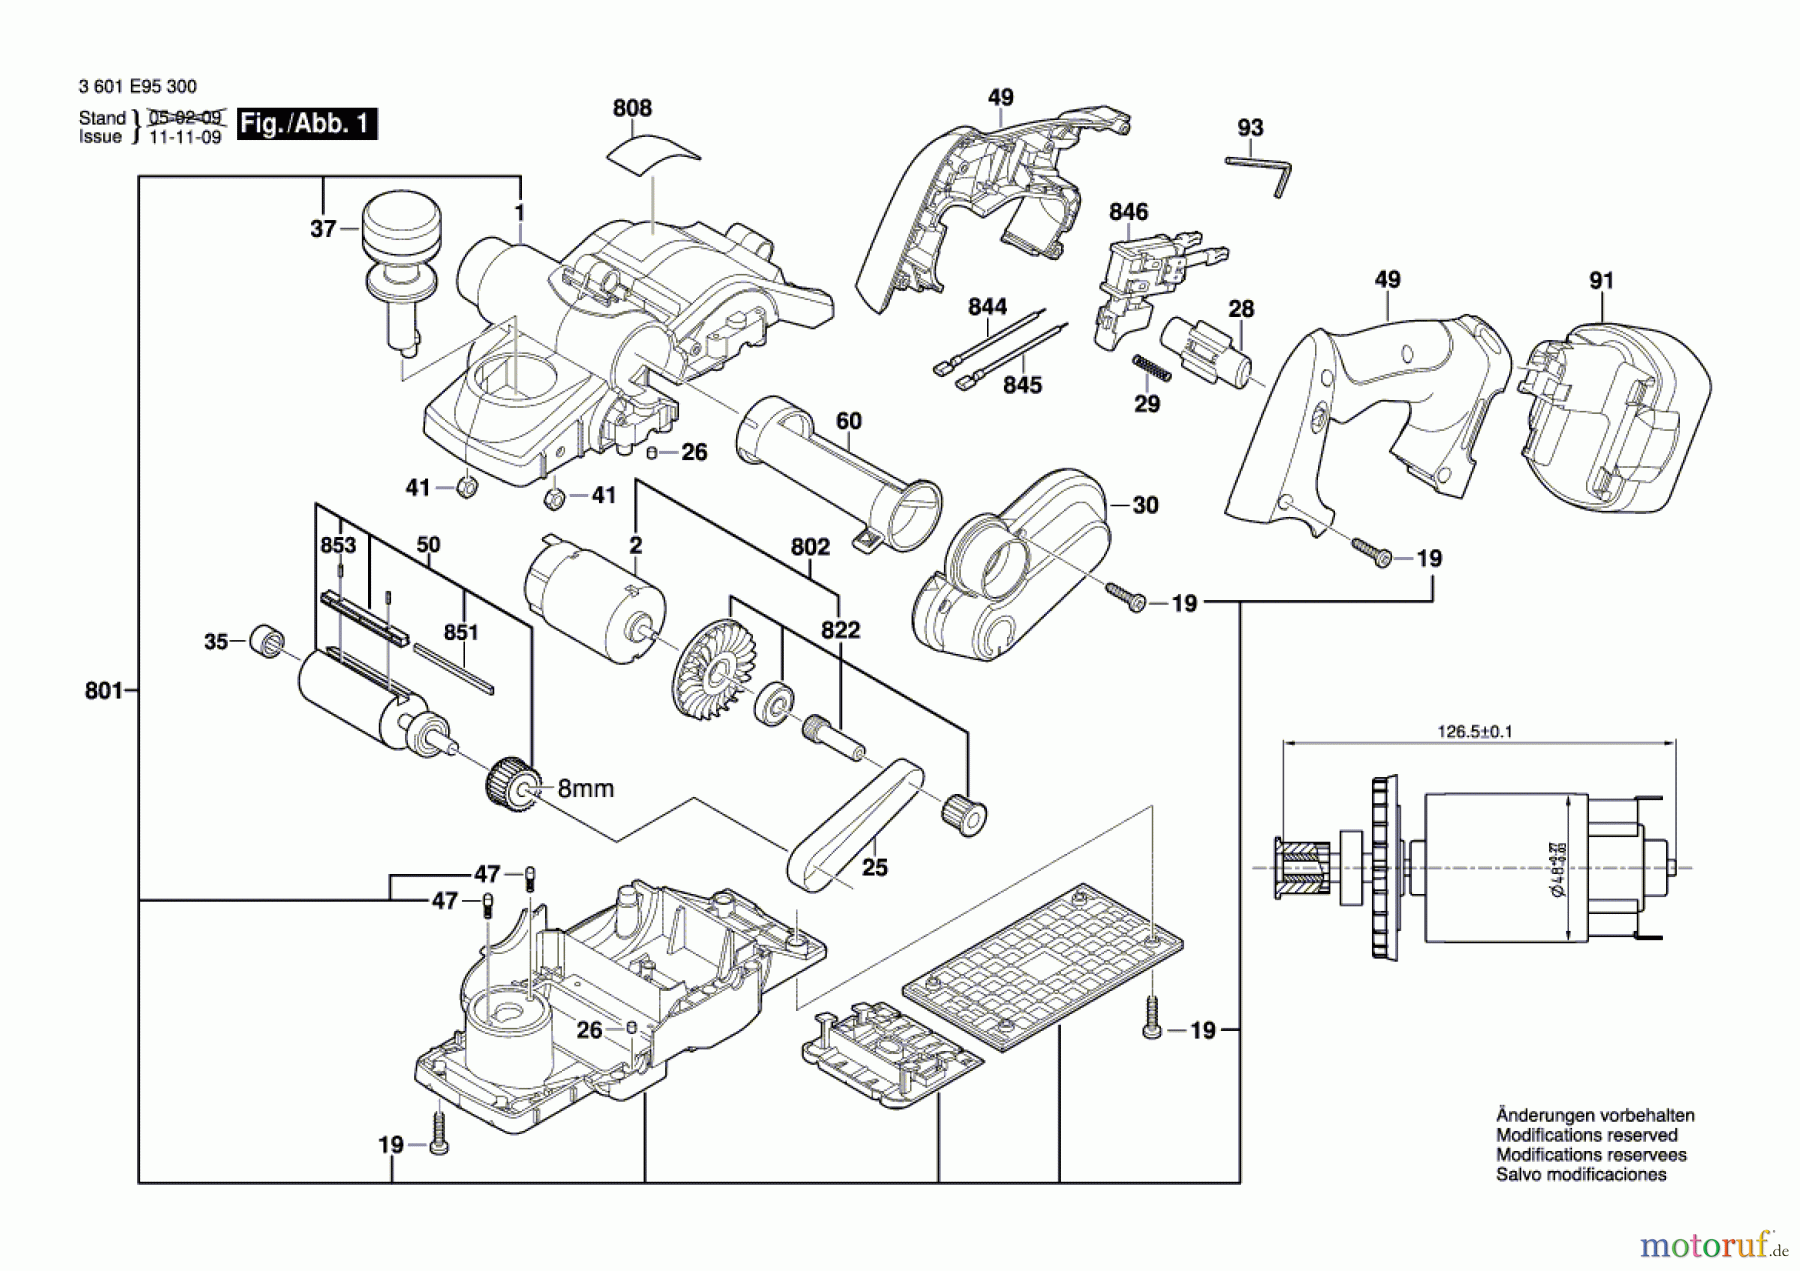  Bosch Werkzeug Handhobel GHO 18 V Seite 1